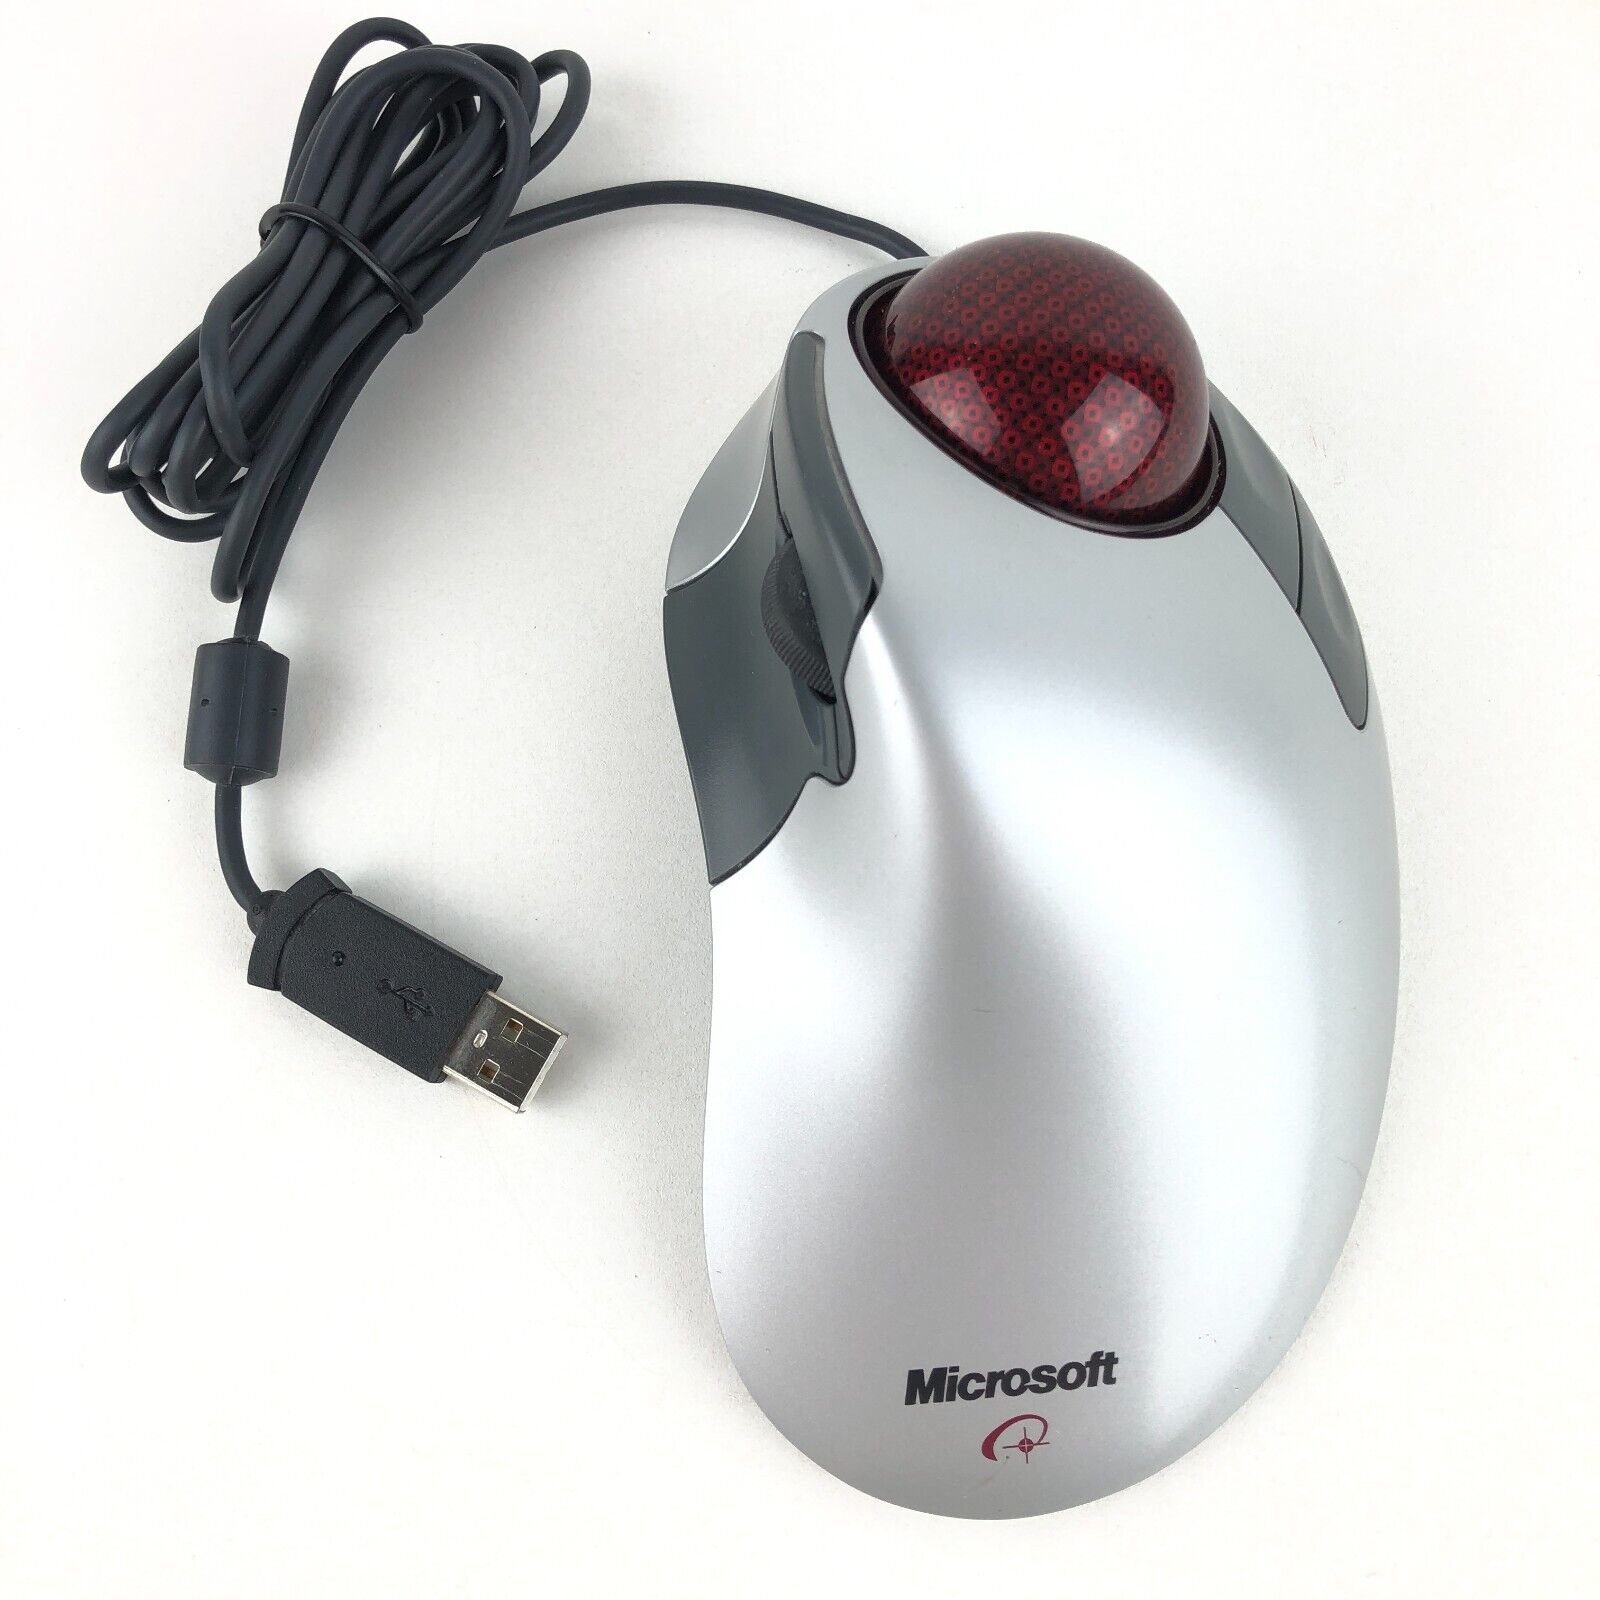 Microsoft Trackball Explorer 1.0 PS2 / USB Optical Mouse X08-70390 TESTED Works